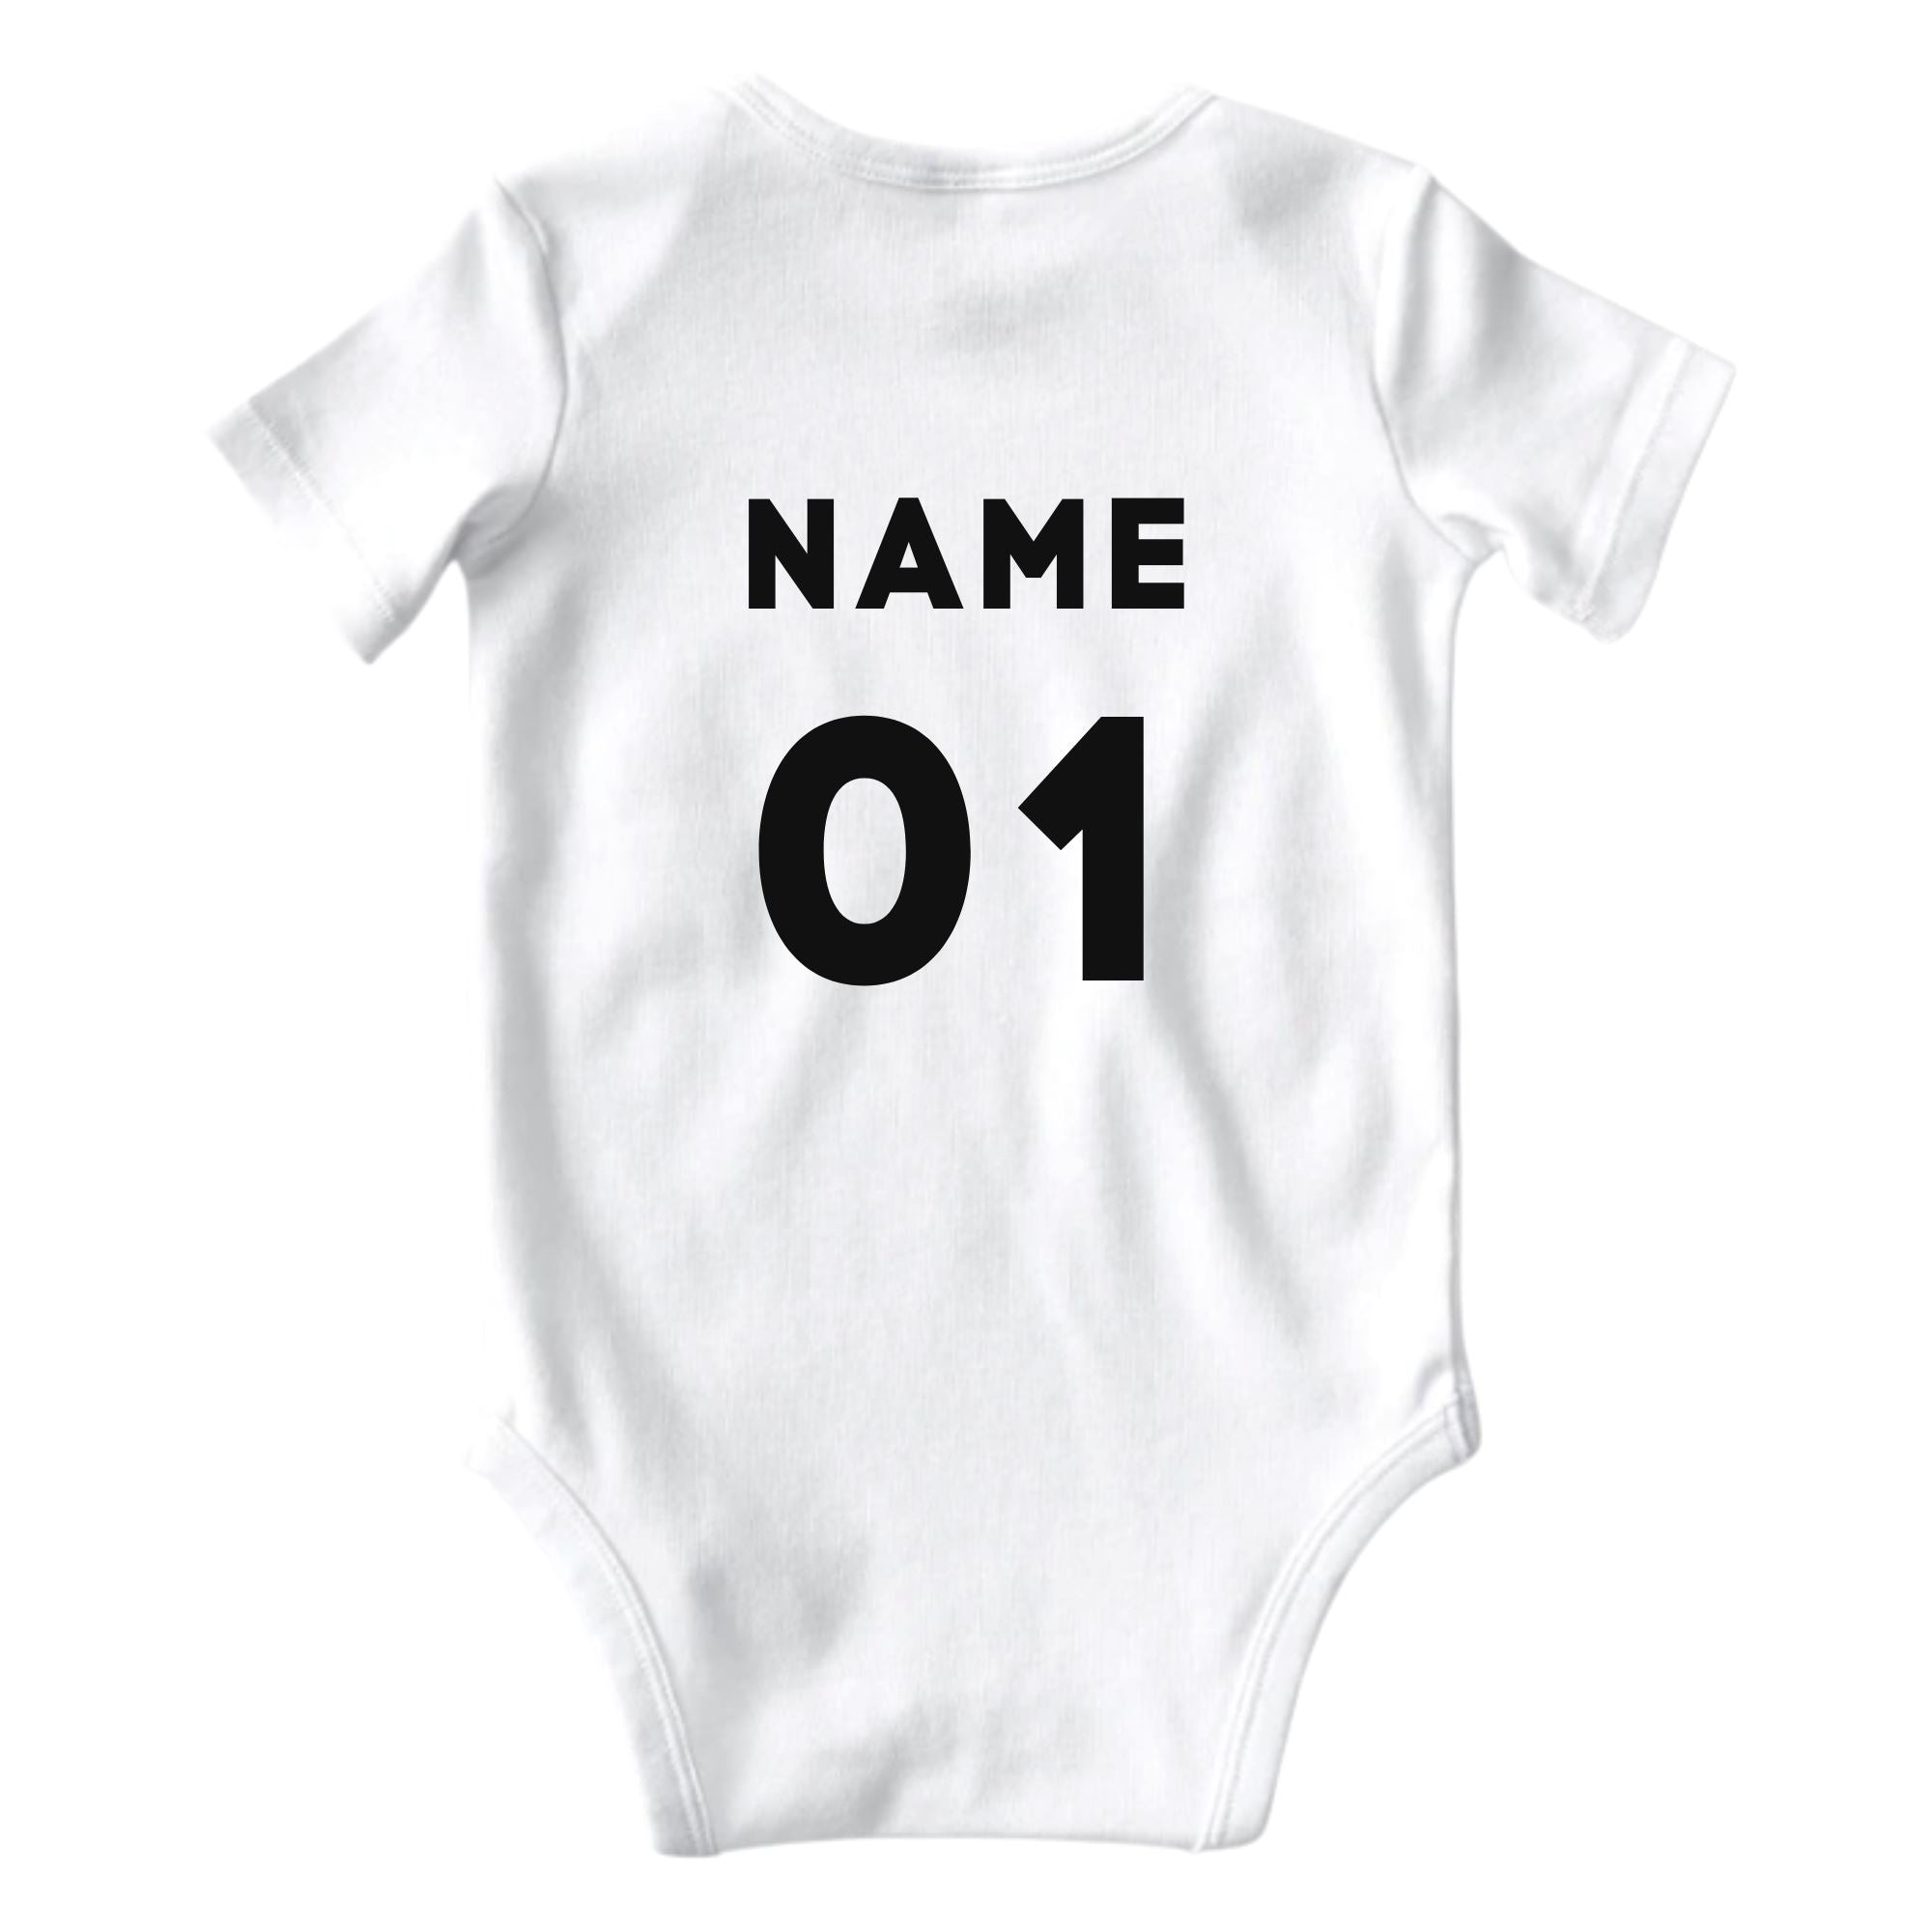 Italia 24/25 Baby Bodysuit w/ name and number - ITA SPORT